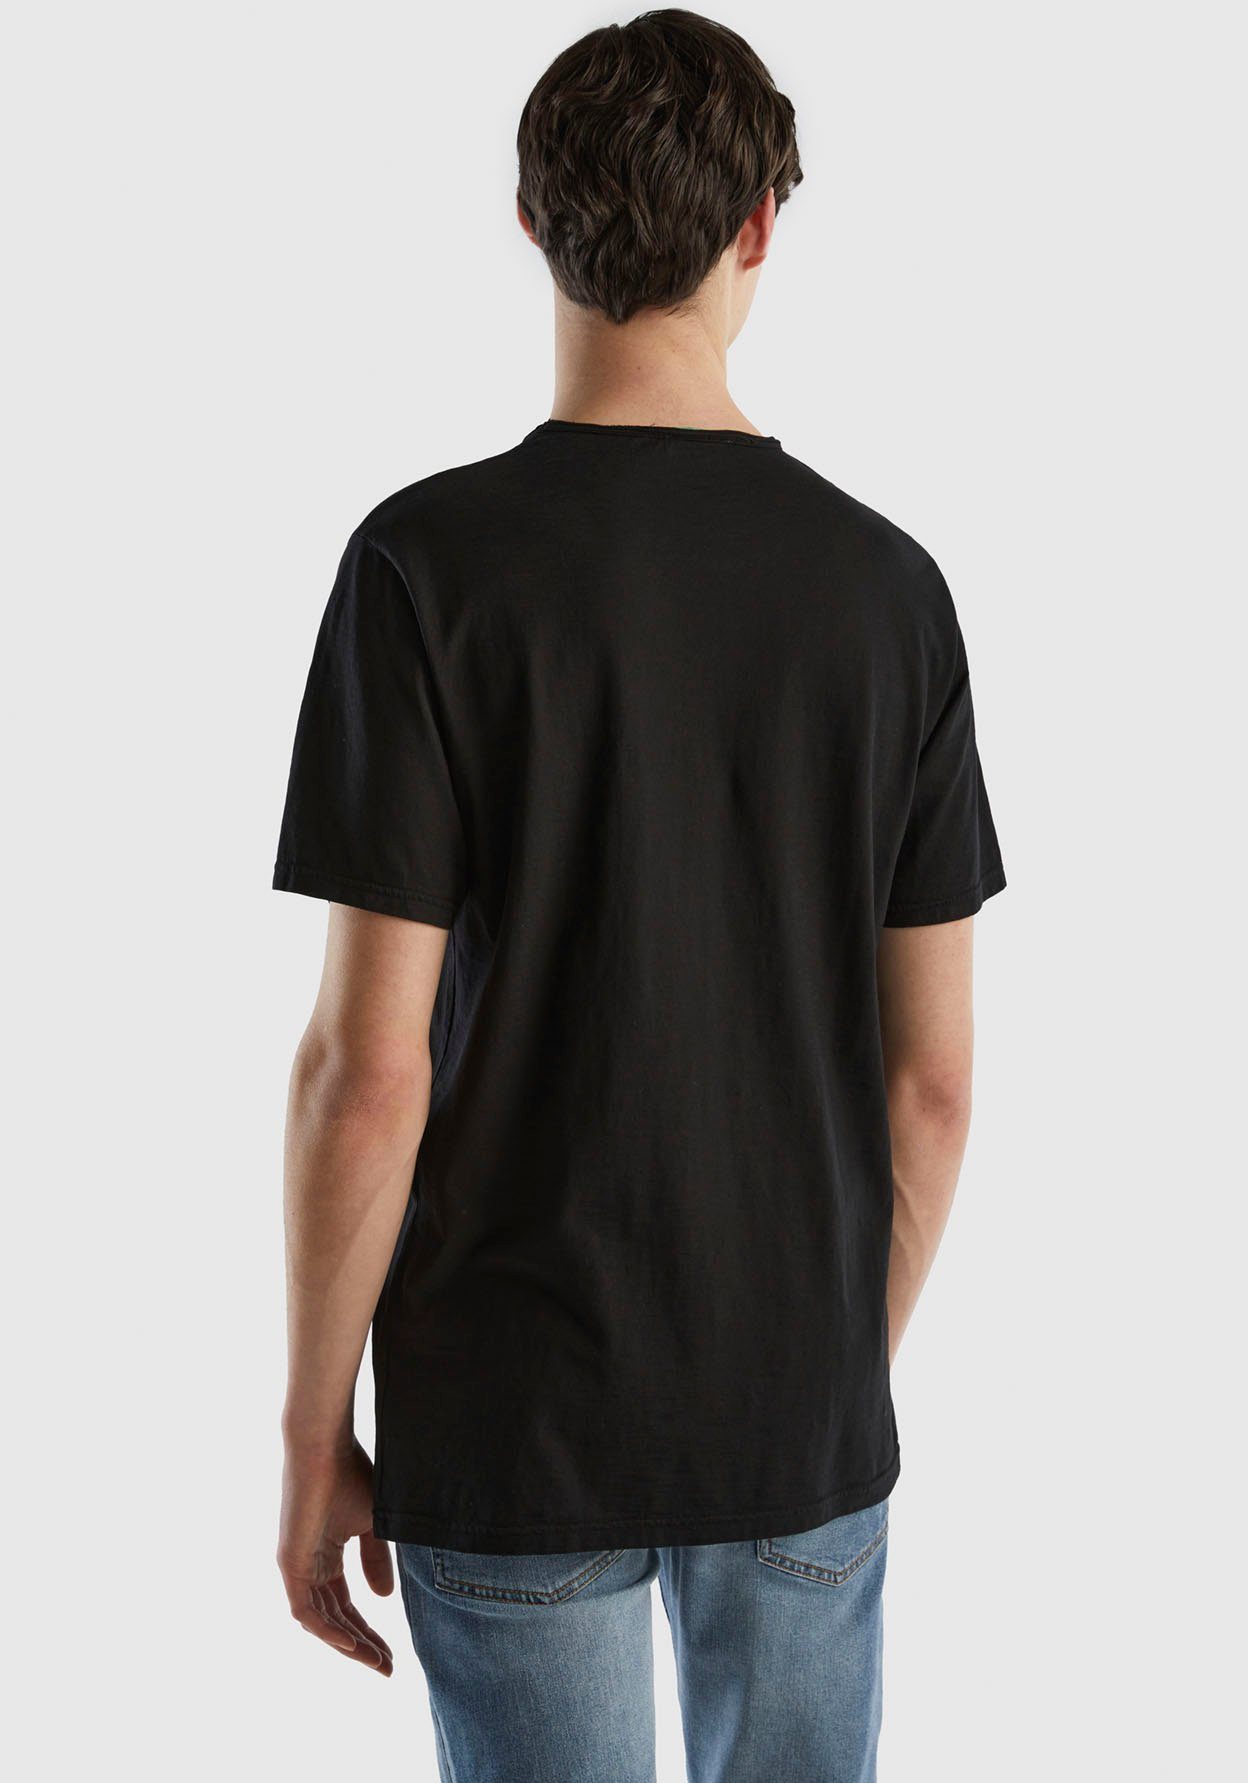 United Colors of Benetton T-Shirt schwarz in Basic-Form gerader